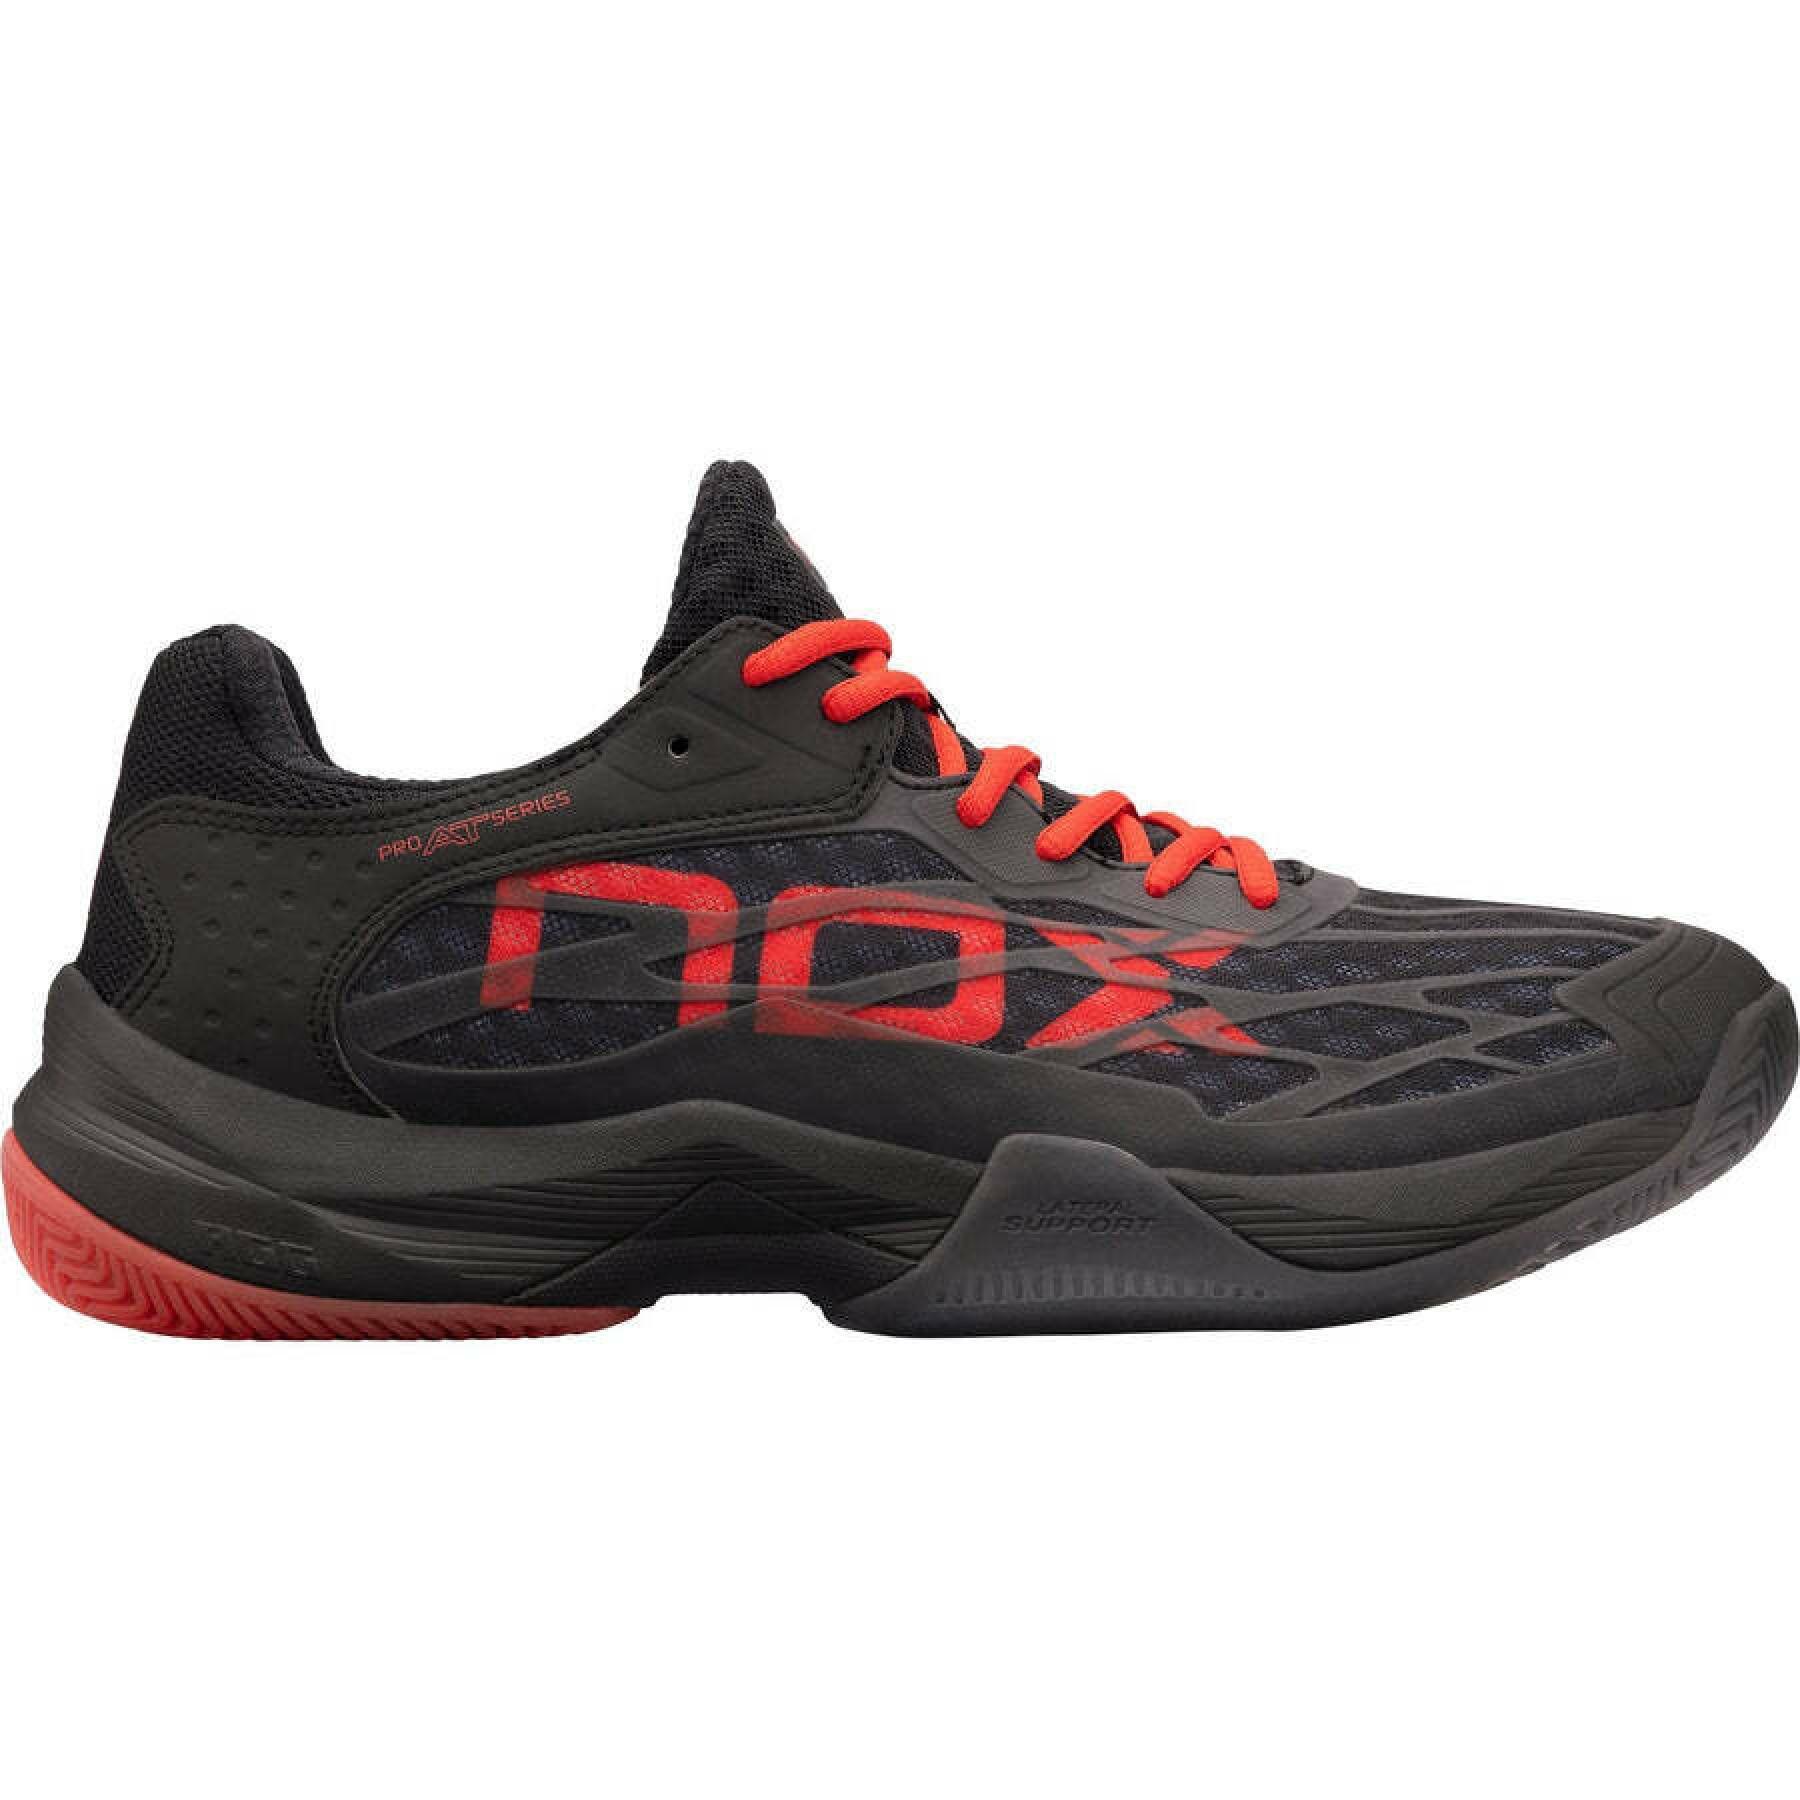 Binnen schoenen Nox At10 Lux